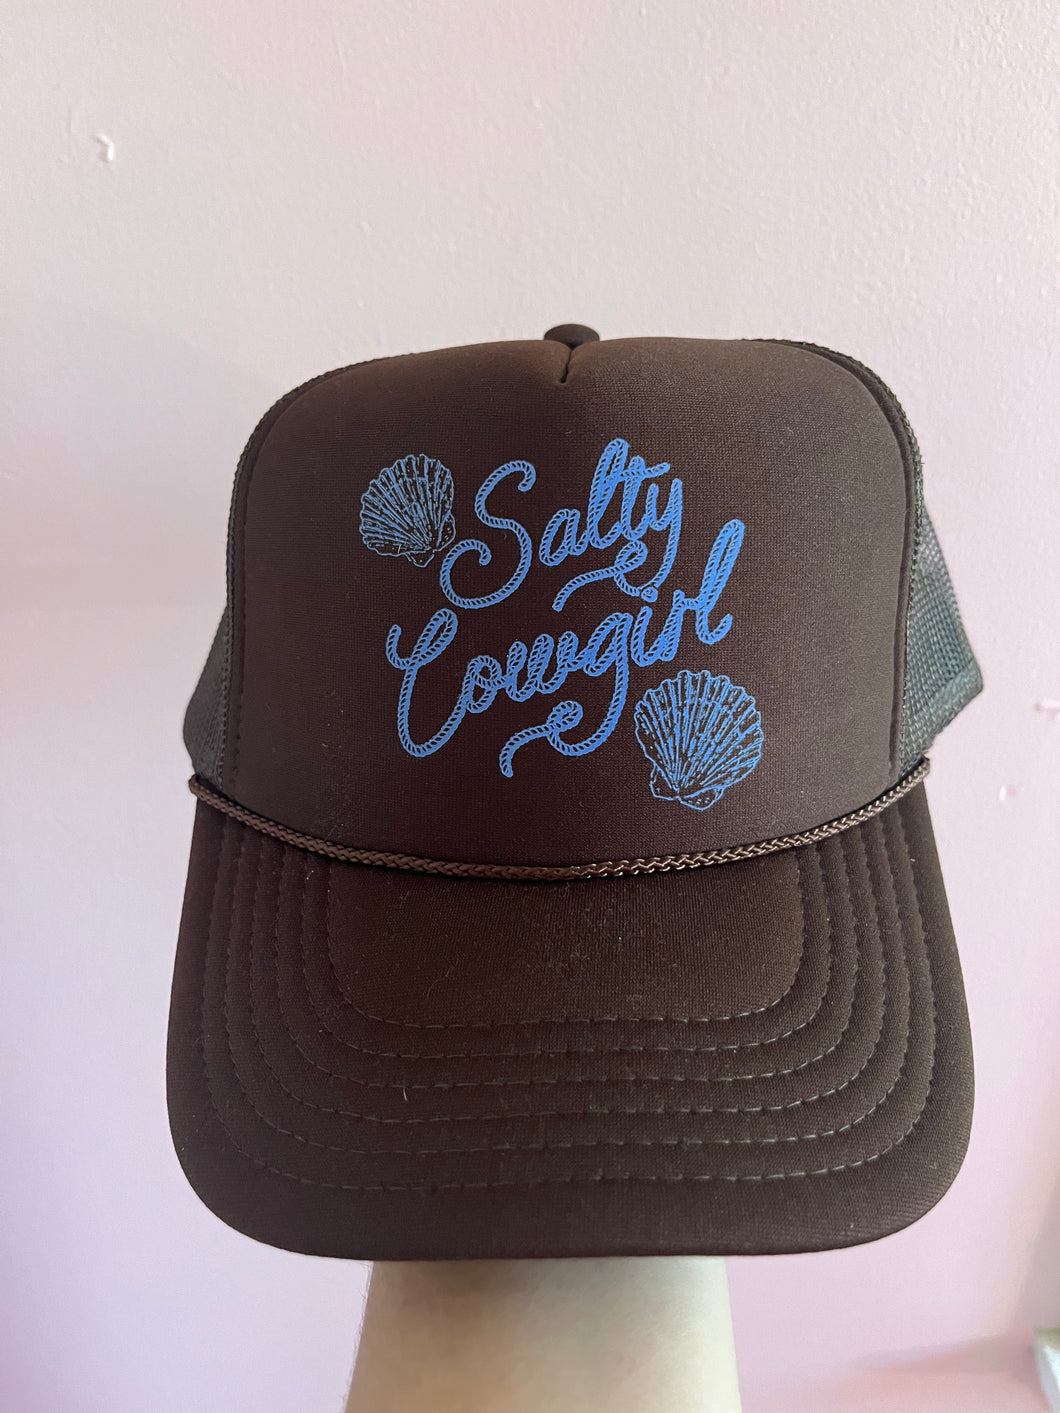 Salty cowgirl trucker hat